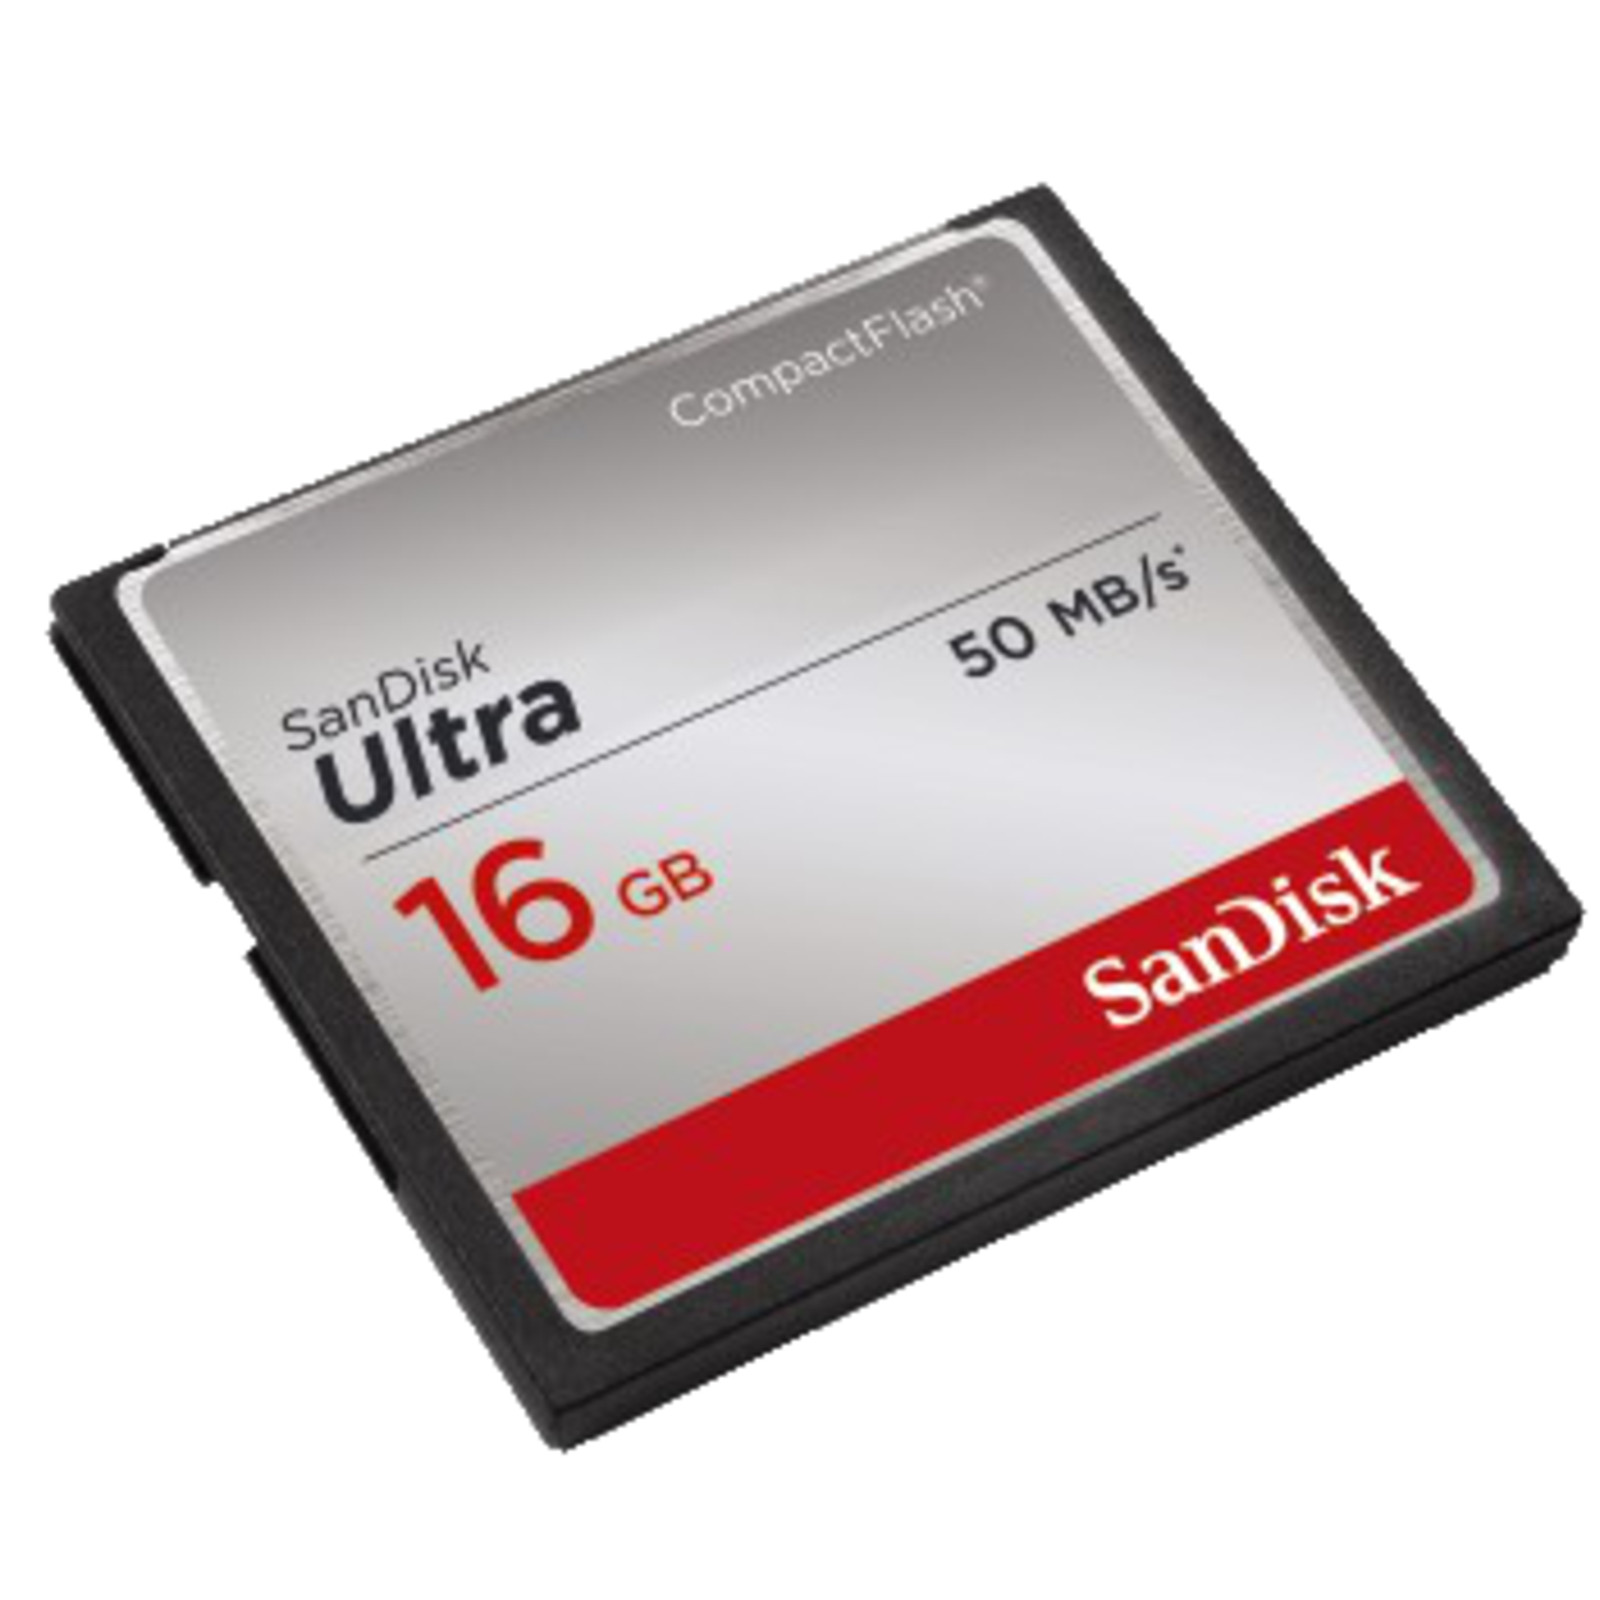 SANDISK Ultra, Compact Flash Speicherkarte, 16 GB, 50 MB/s eBay